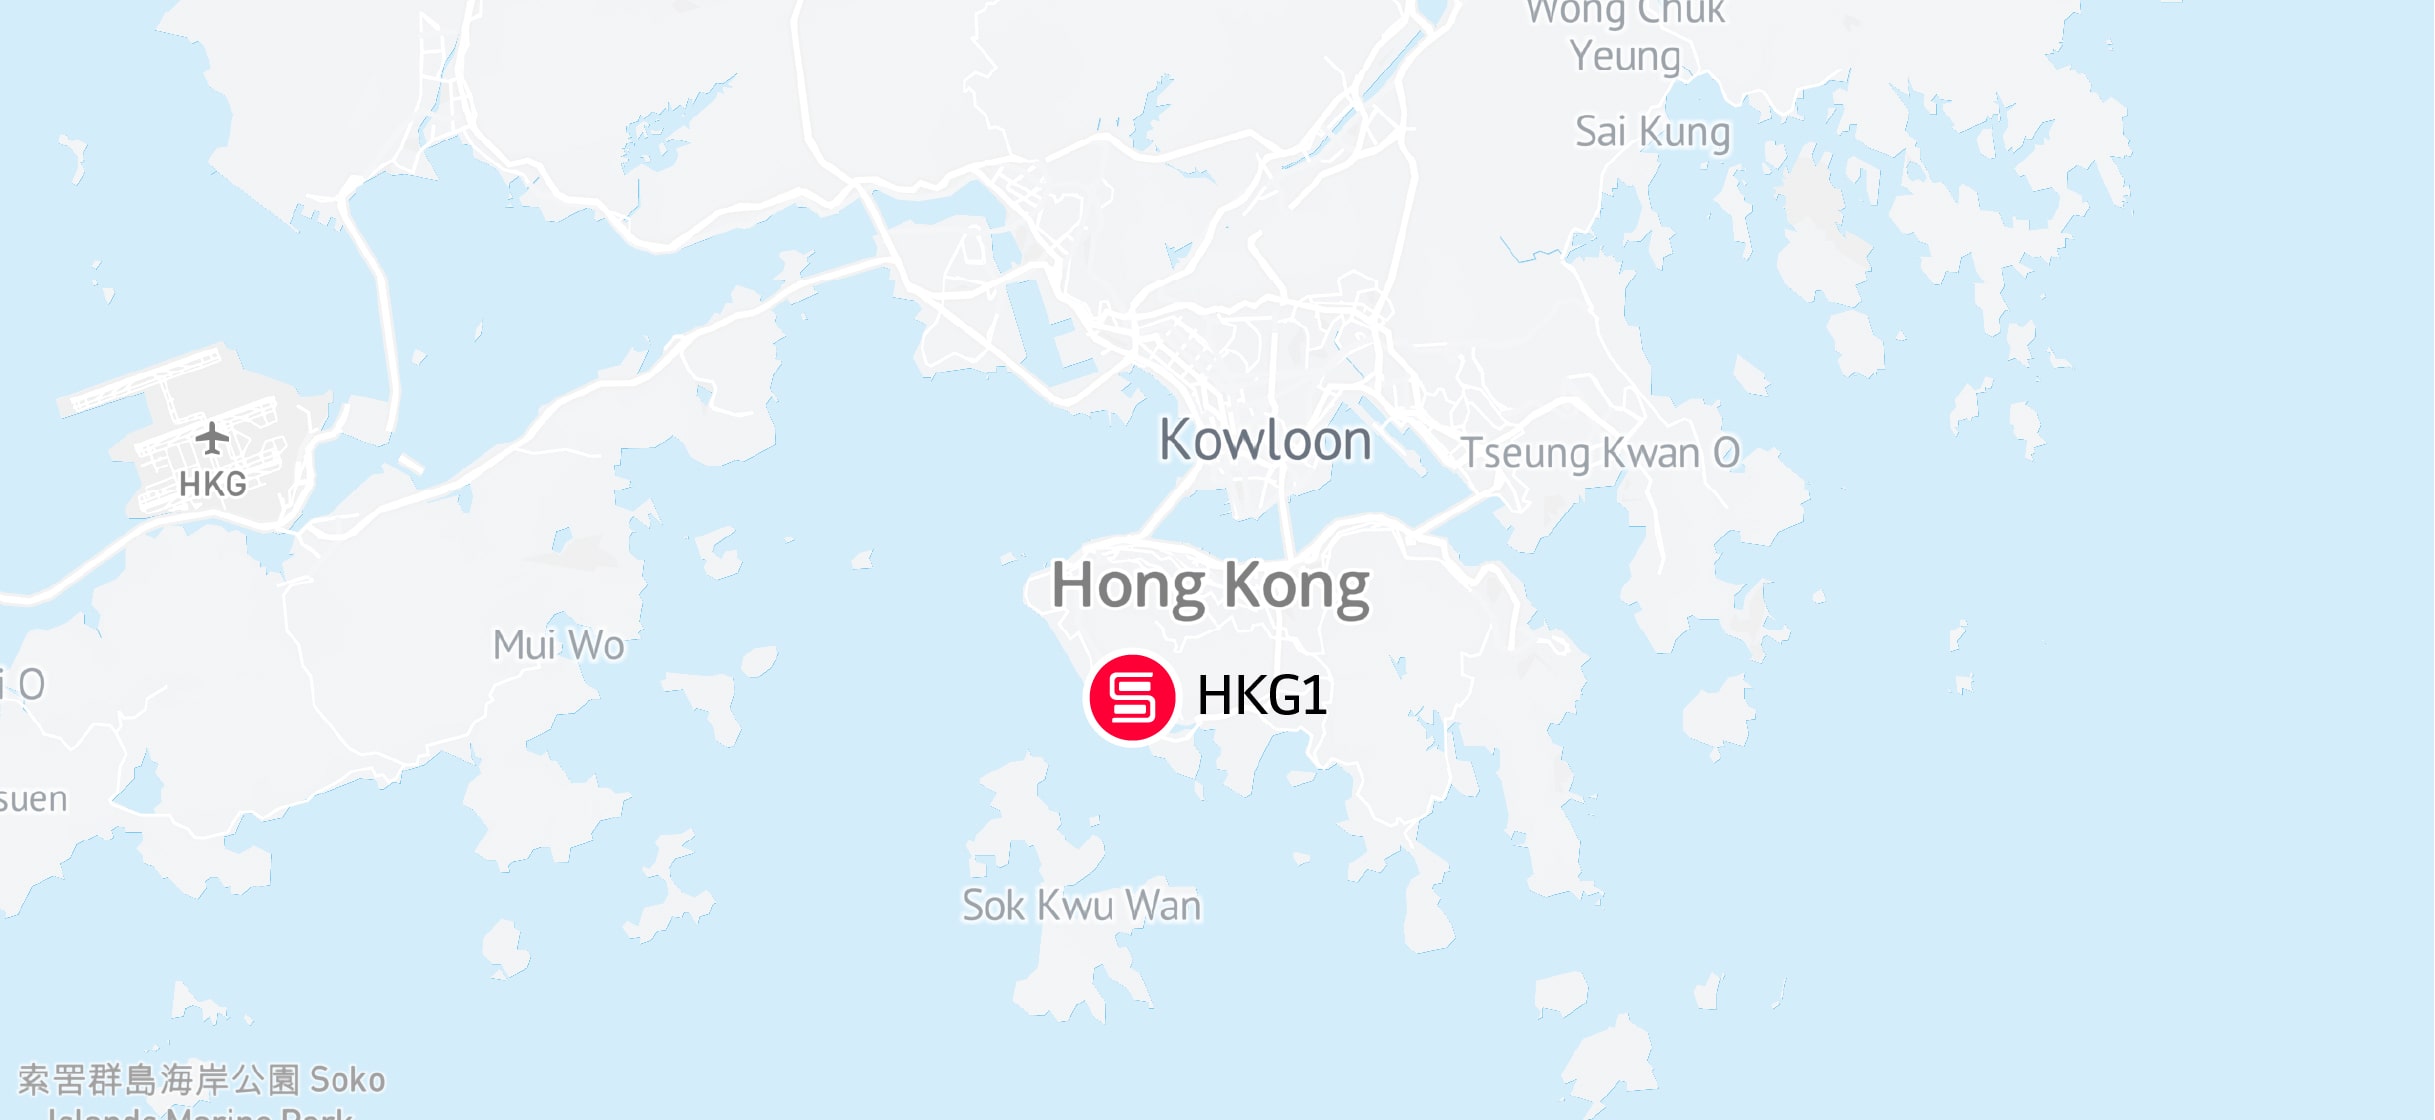 Hong Kong data center location on map